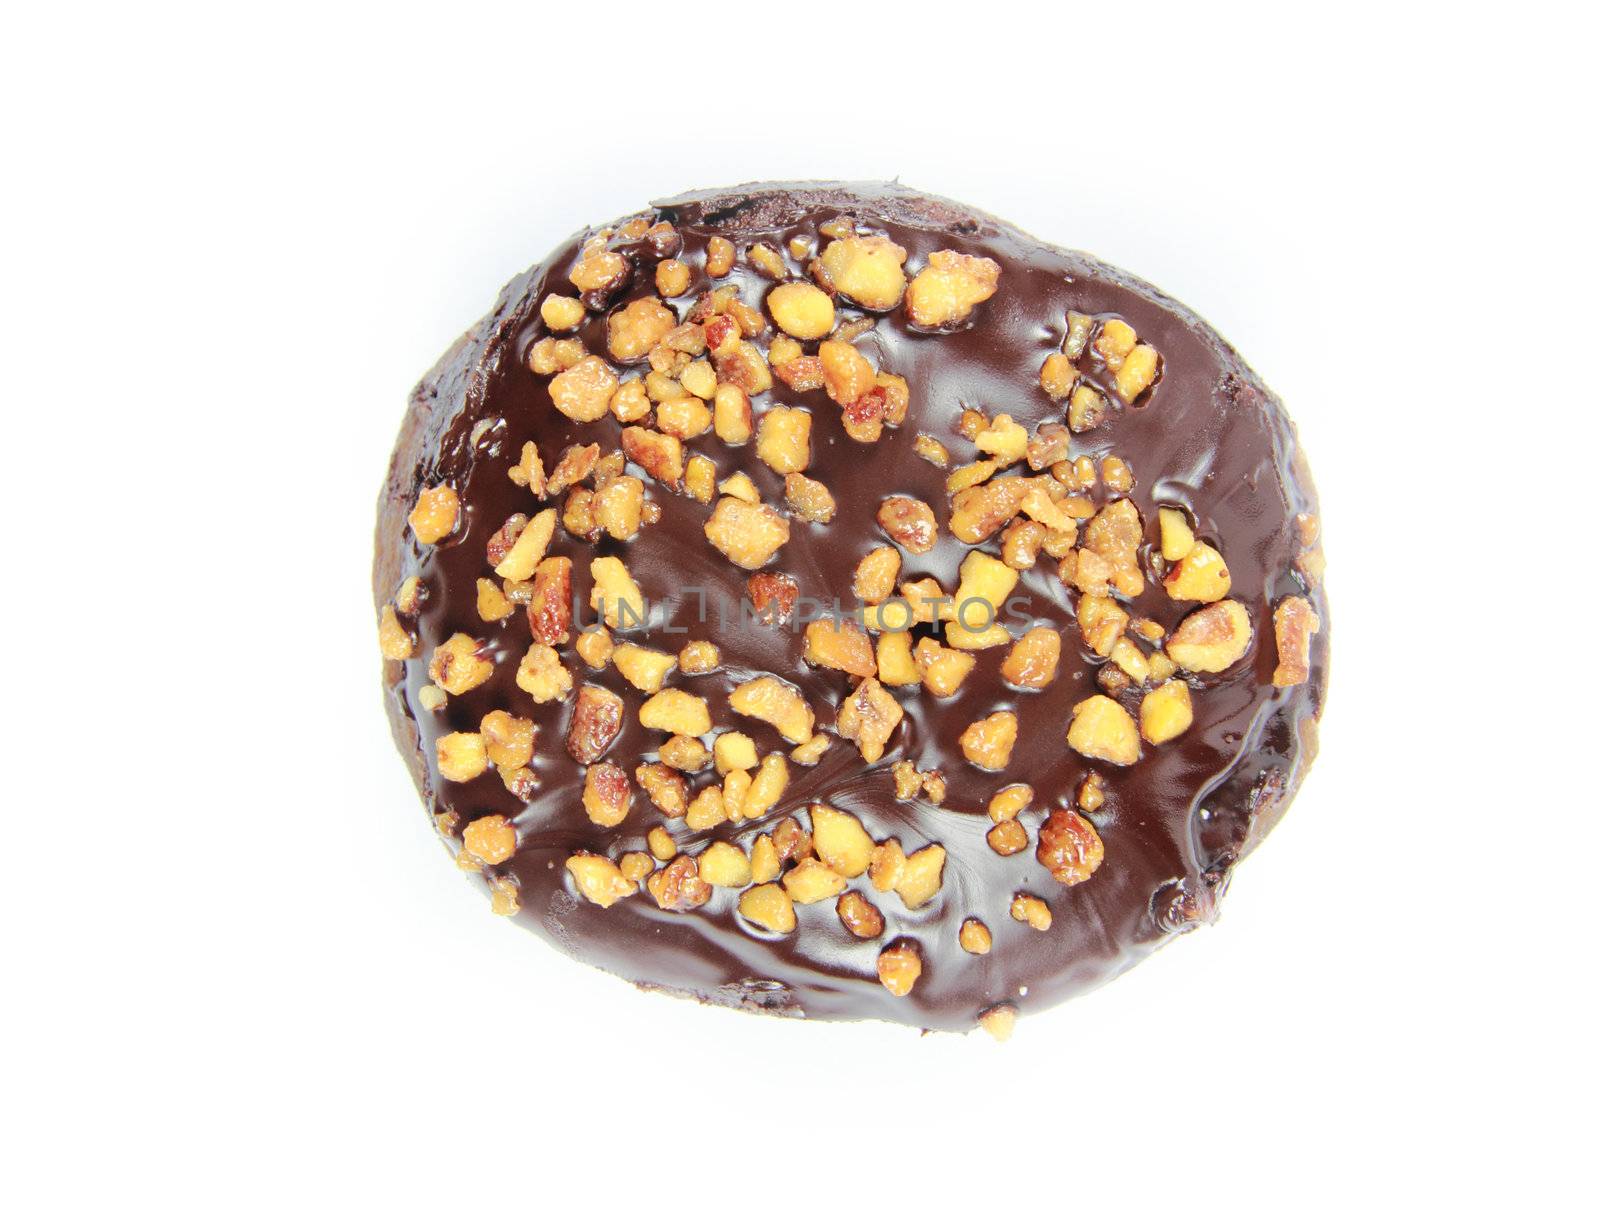 Chocolate Donut by wyoosumran